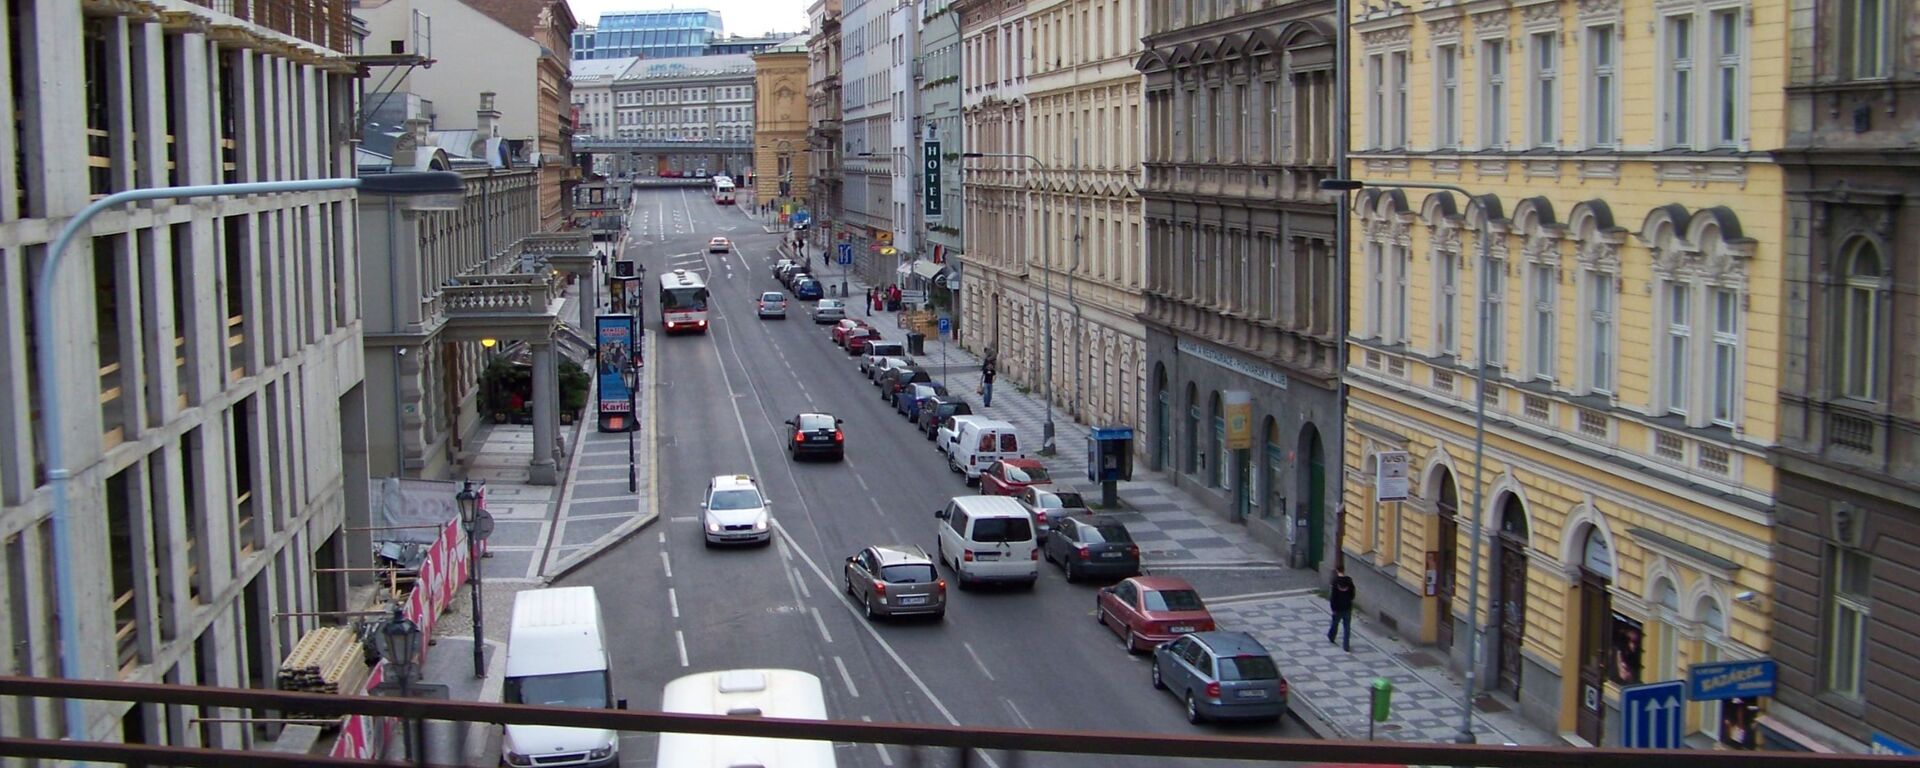 Улица Křižíkova в Праге, Чехия - Sputnik Latvija, 1920, 21.03.2022